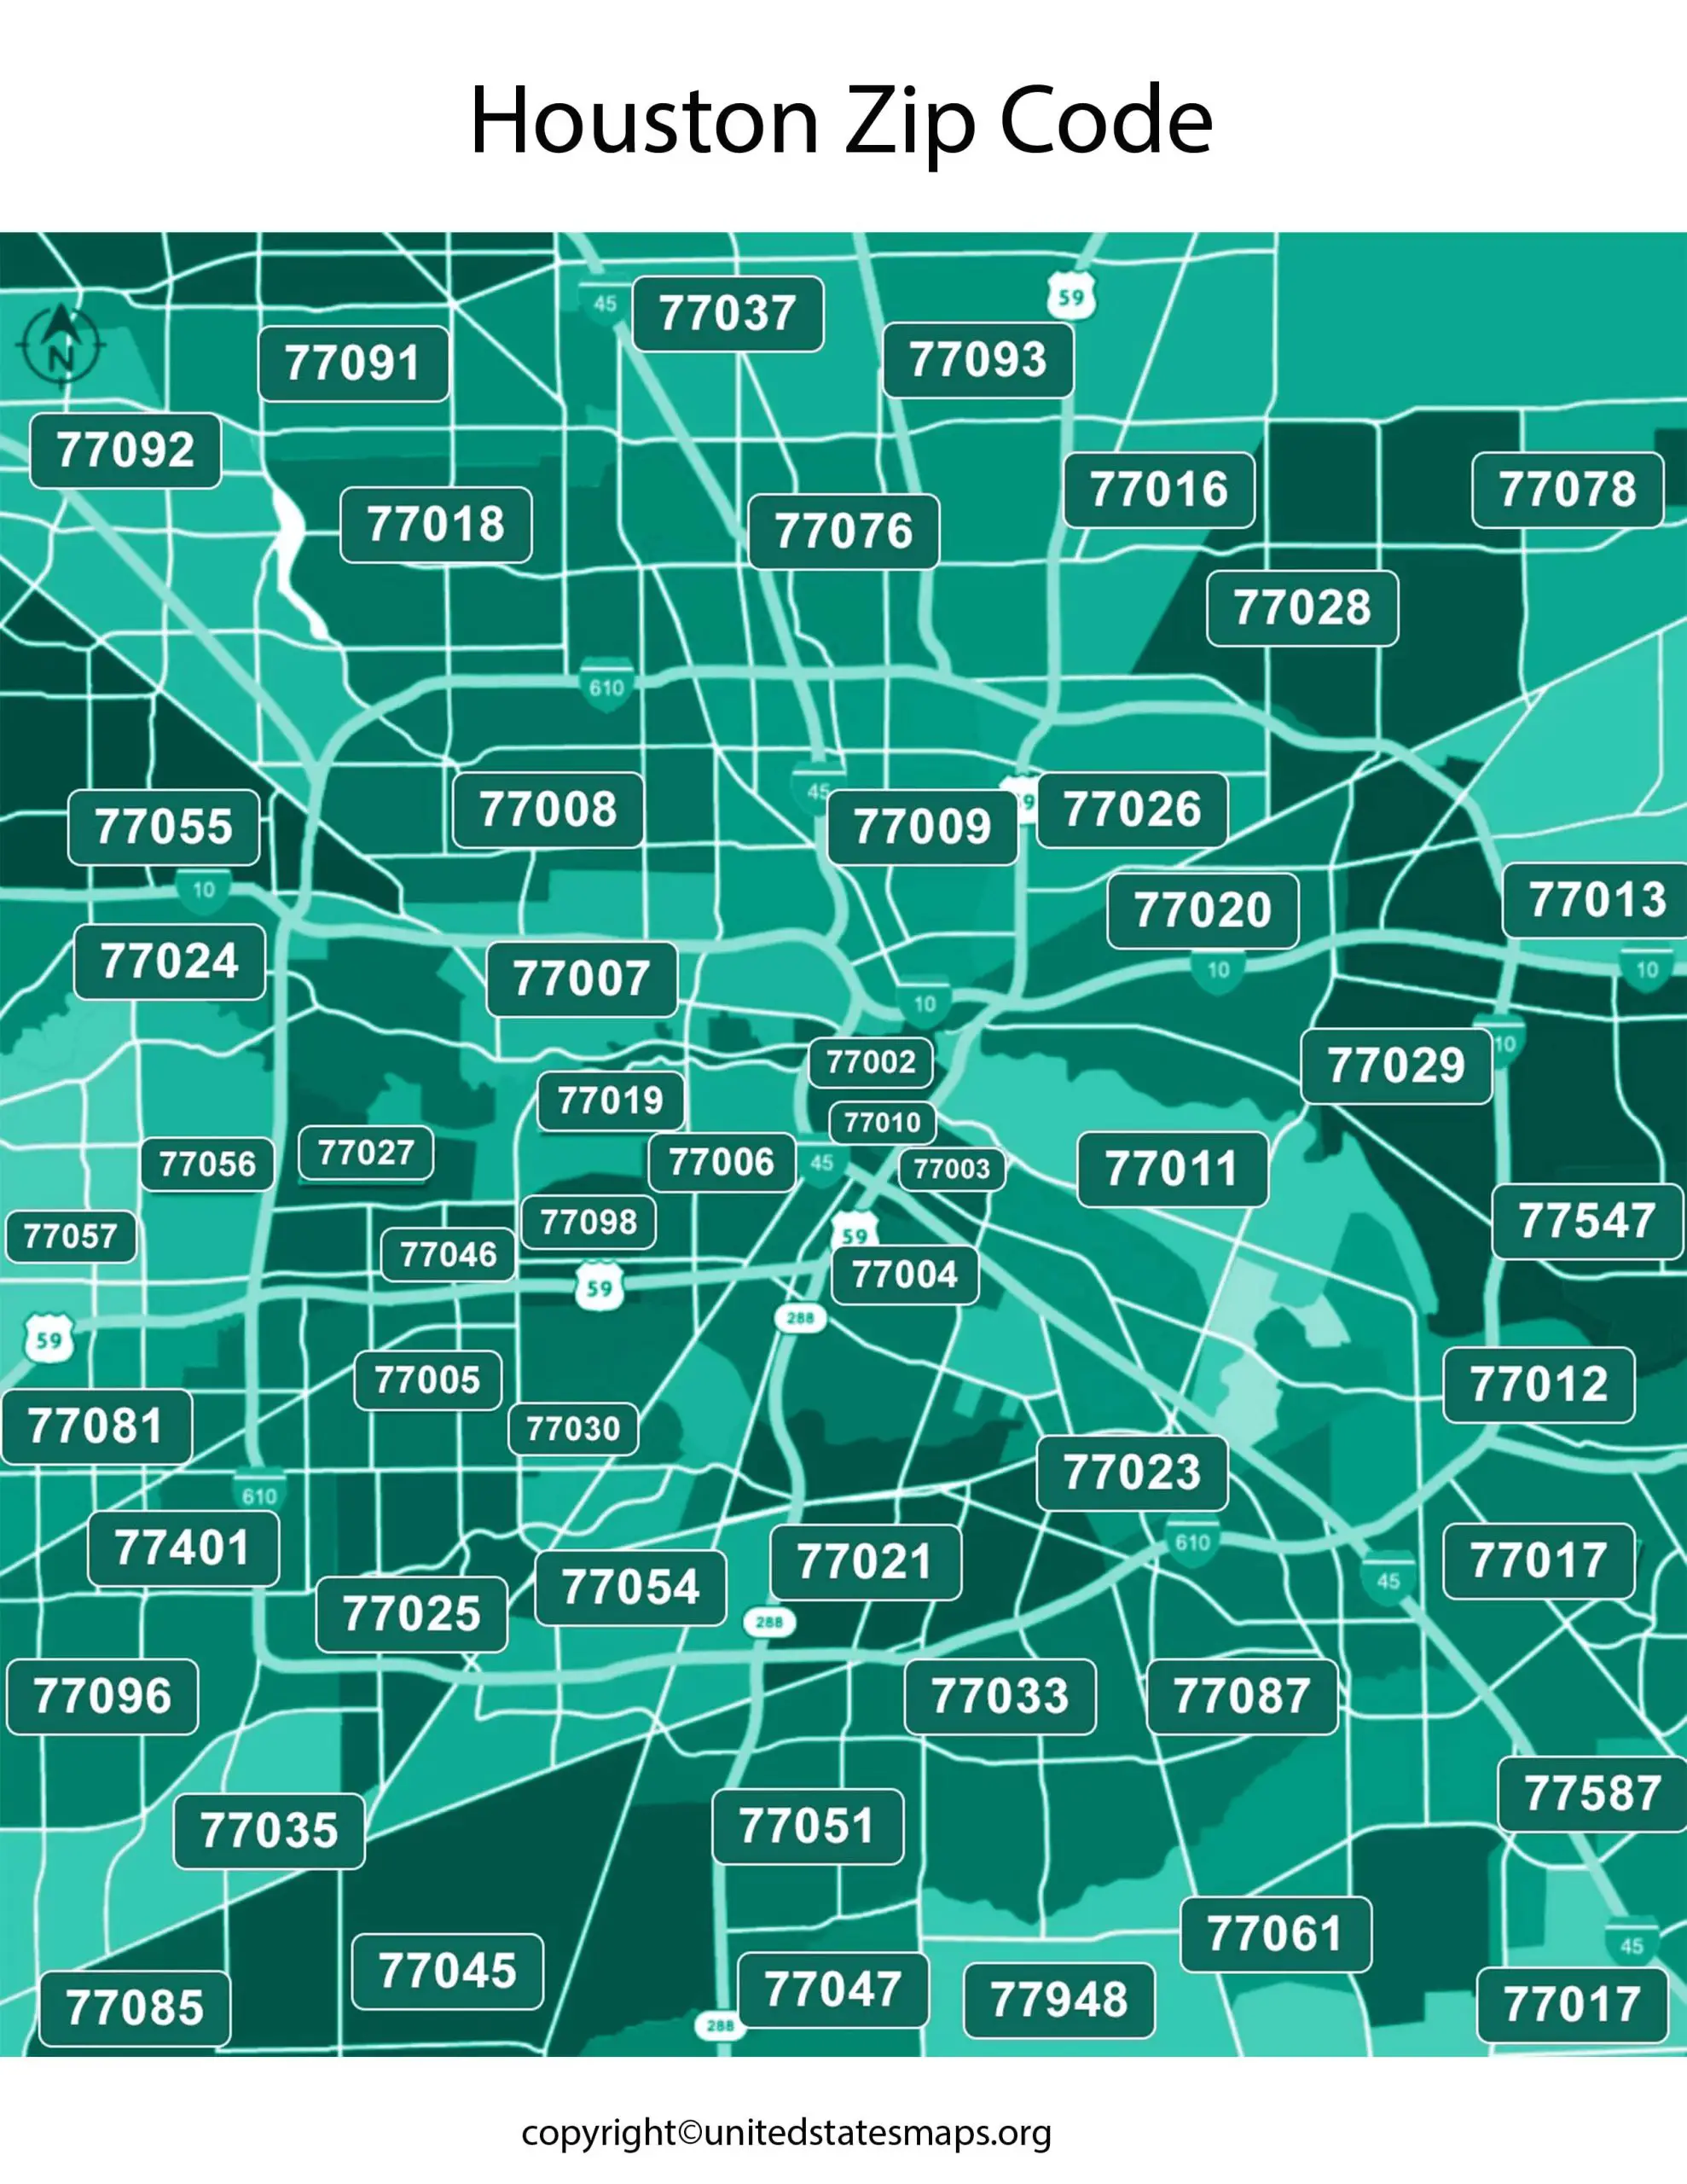 Houston Zip Code Map | Map of Houston Zip Codes